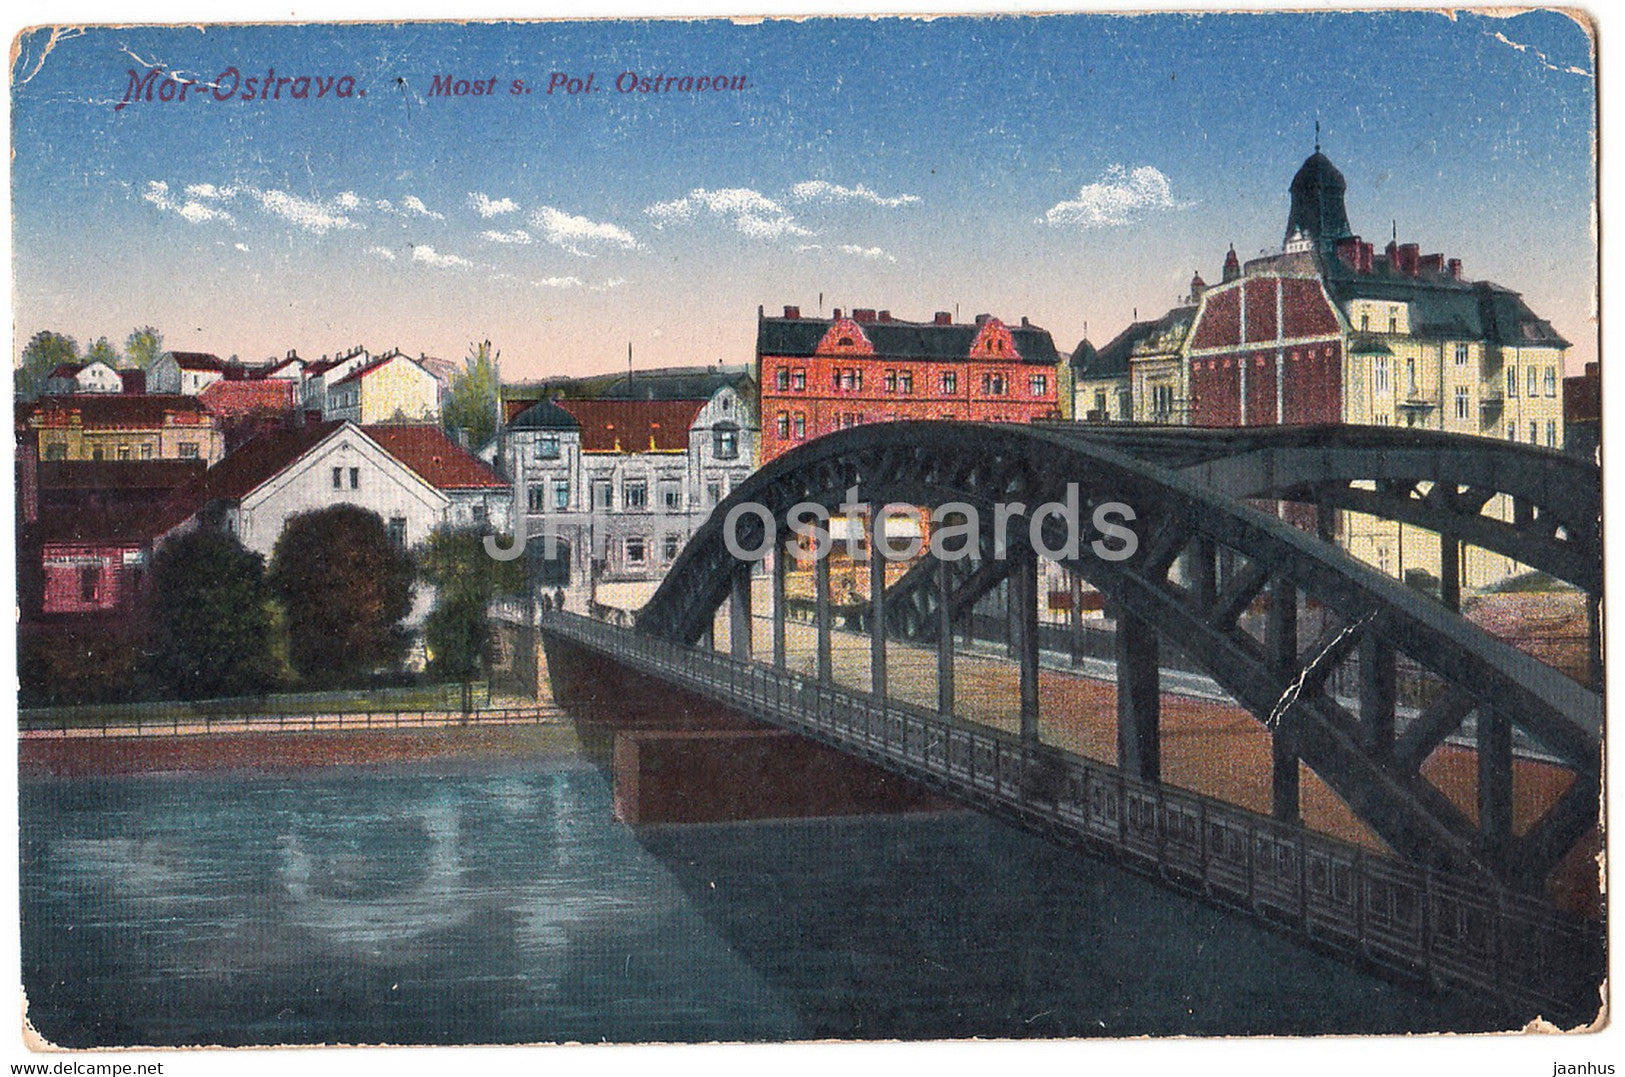 Mor Ostrova - Most s Pol Ostrovou - bridge - old postcard - 1919 - Czech Republic - used - JH Postcards